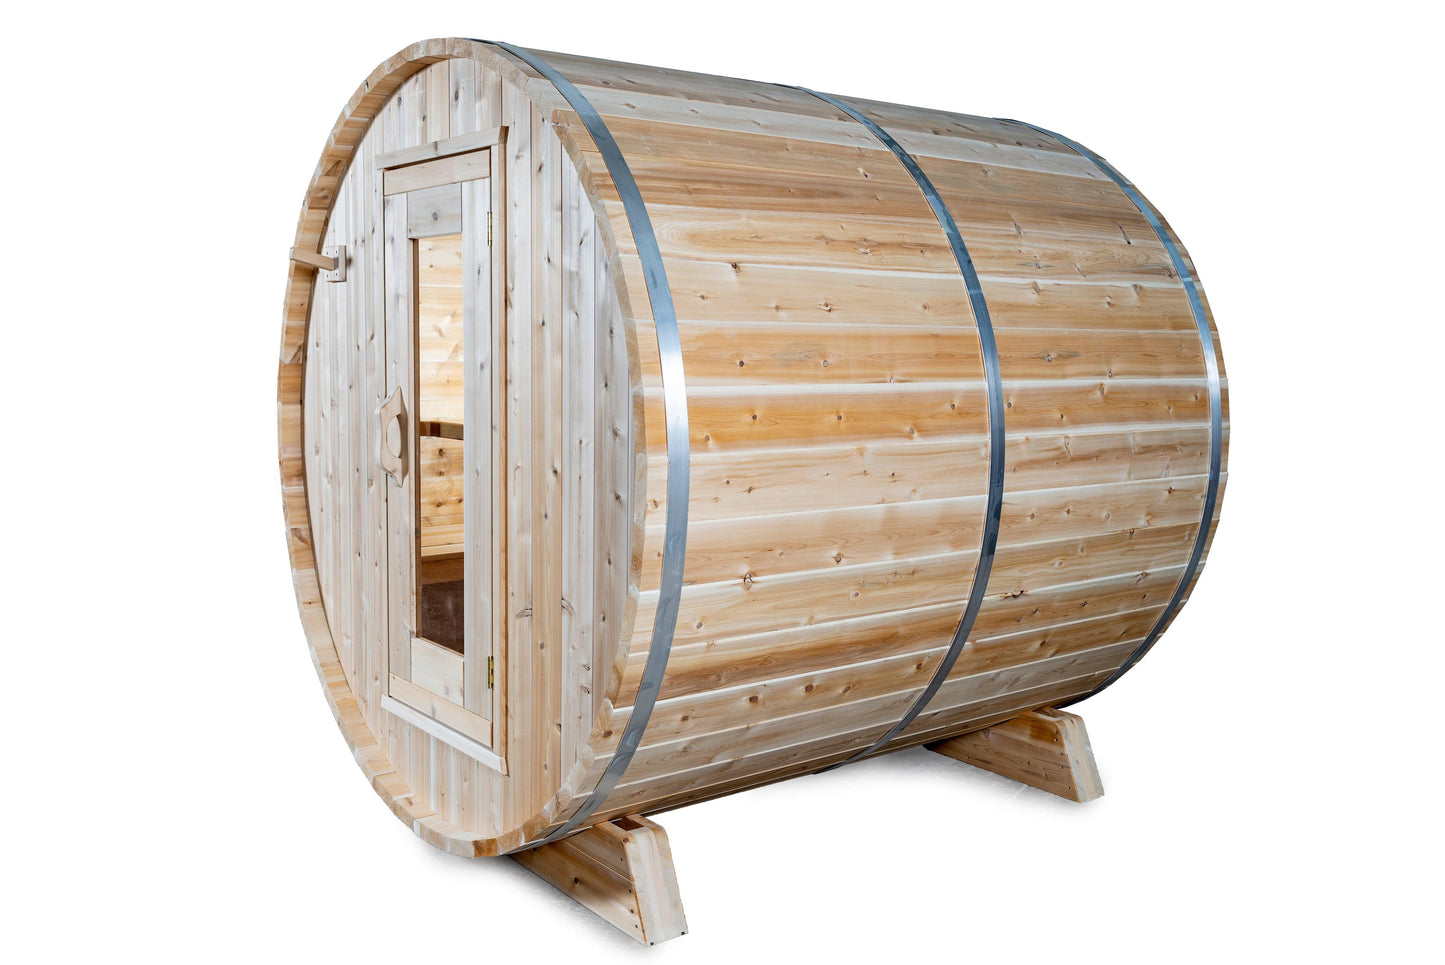 Dundalk Harmony Barrel 4 Person Sauna CTC22W w/ Harvia KIP 8KW Sauna Heater Included